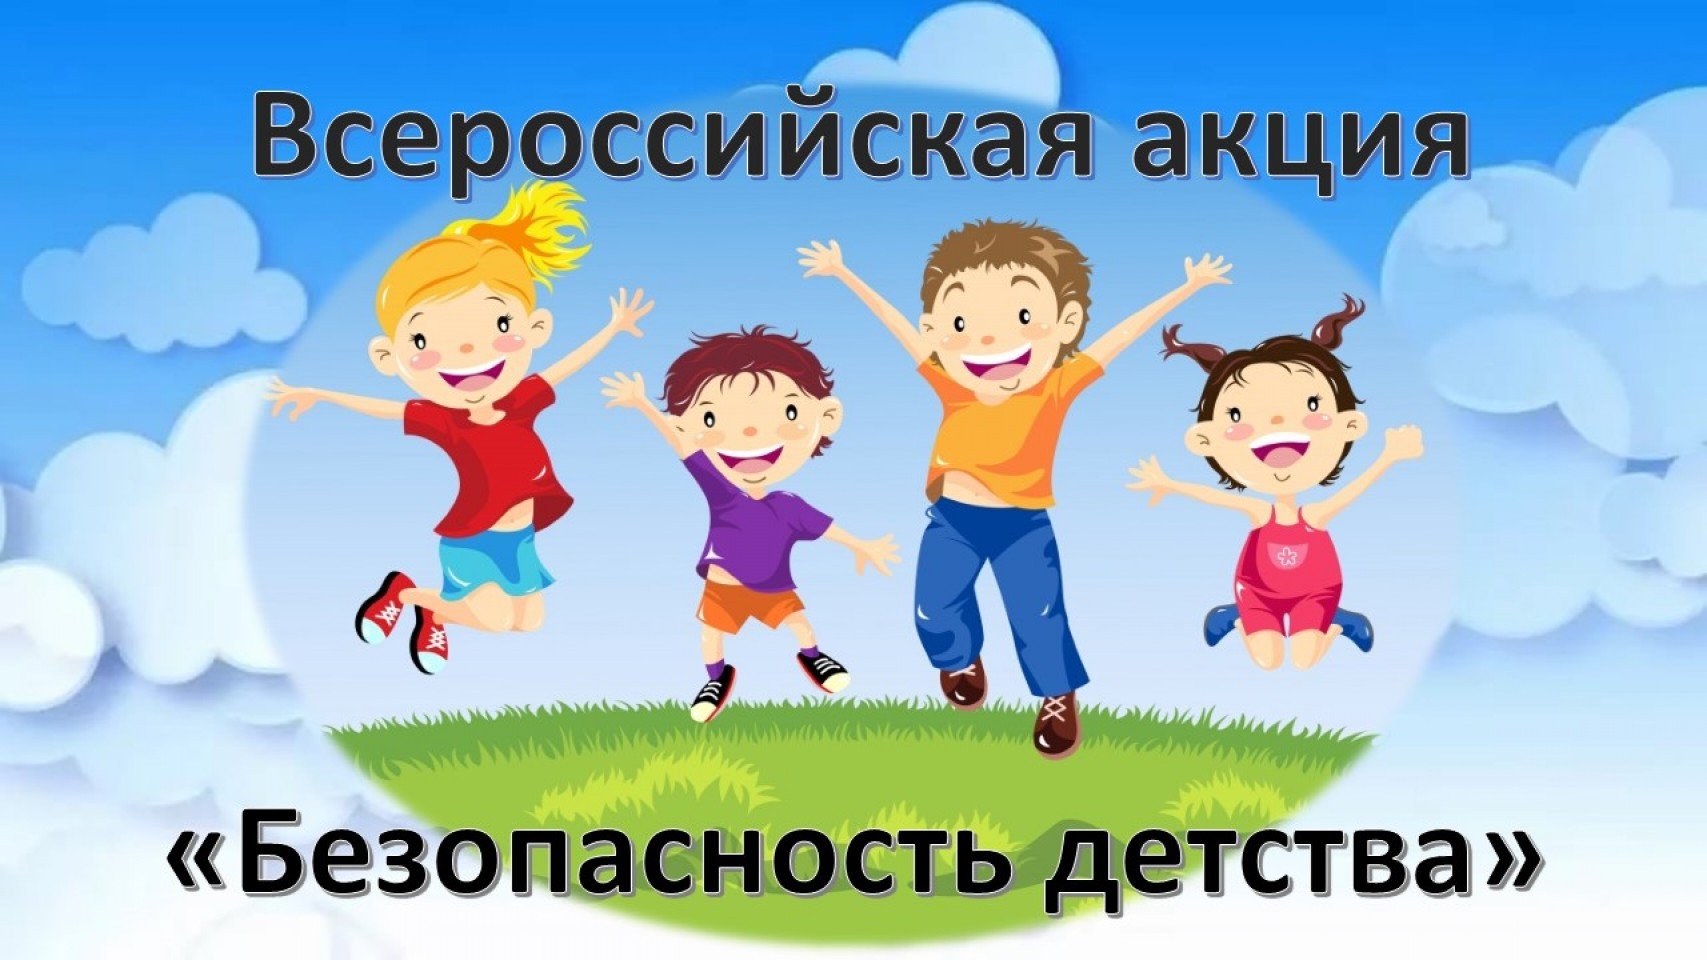 Информация от уполномоченного по правам ребенка при Президенте РФ